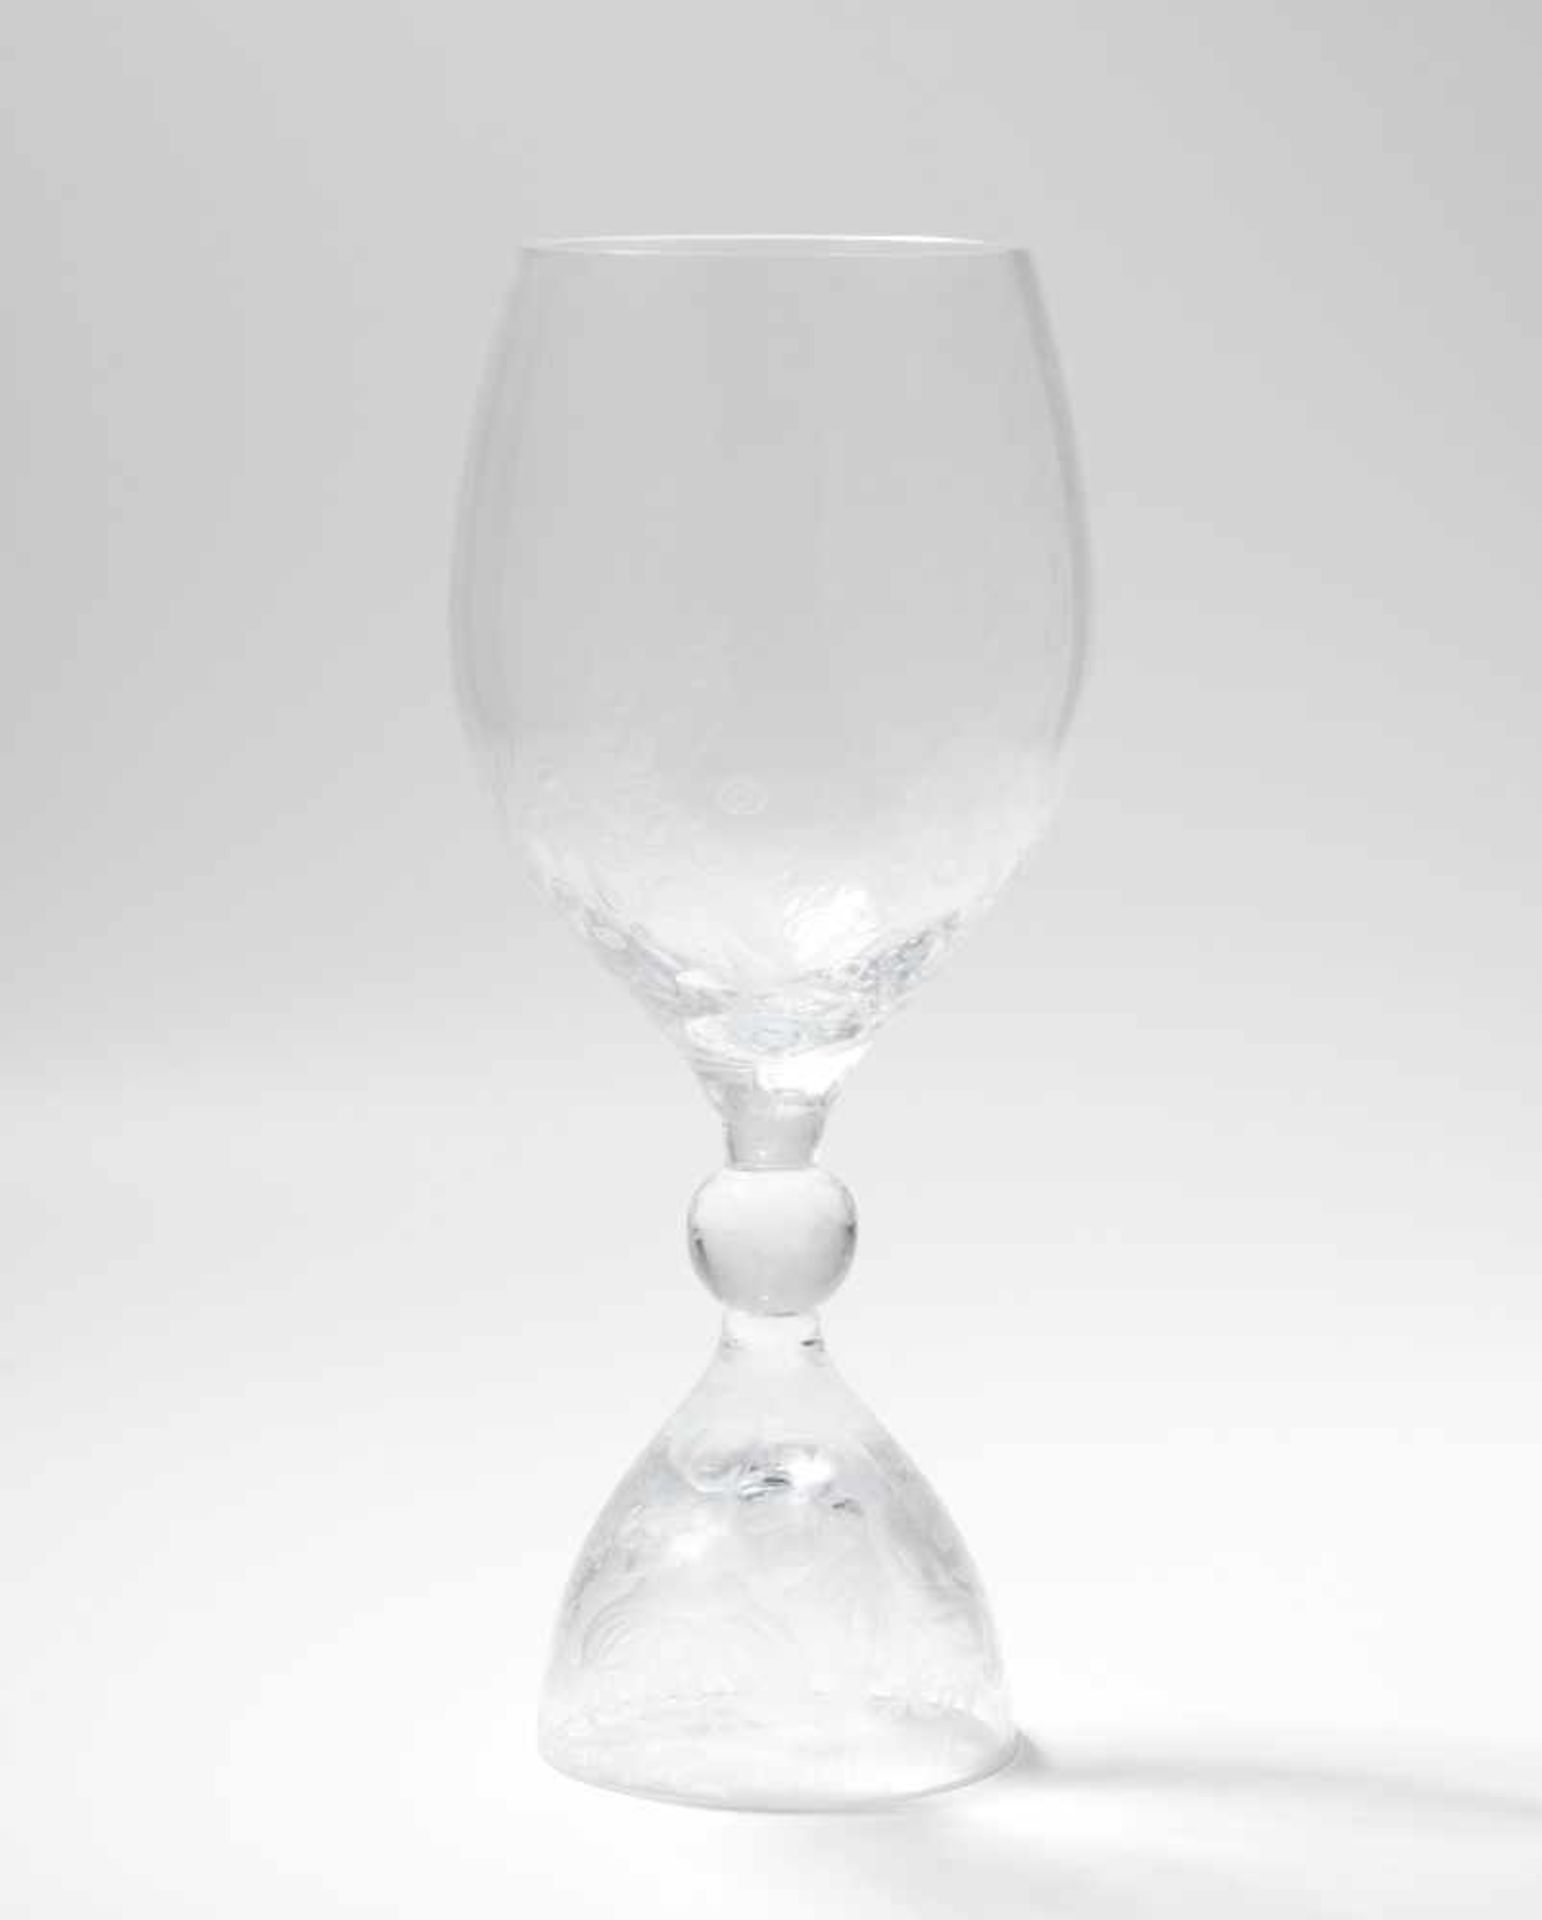 Björn WiinbladRosenthal. Grosser Pokal. Farbloses Kristallglas, Szene aus der Zauberflöte (Pamina